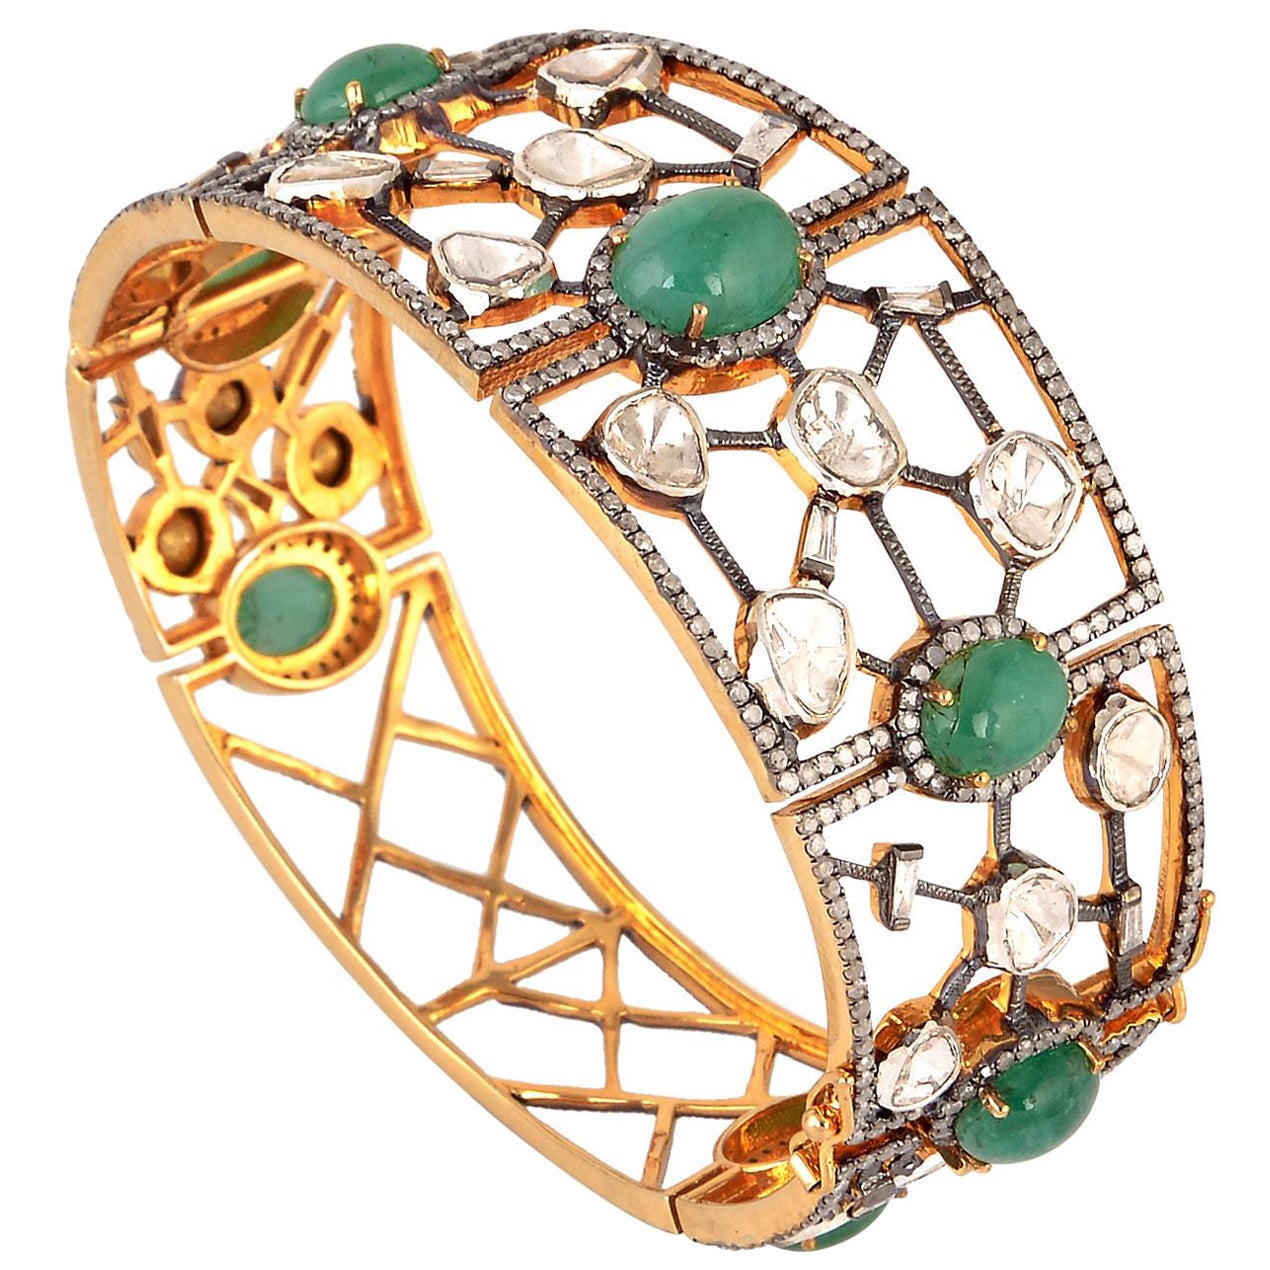 Handmade Emerald Diamond Bangle in 18k Gold & Silver